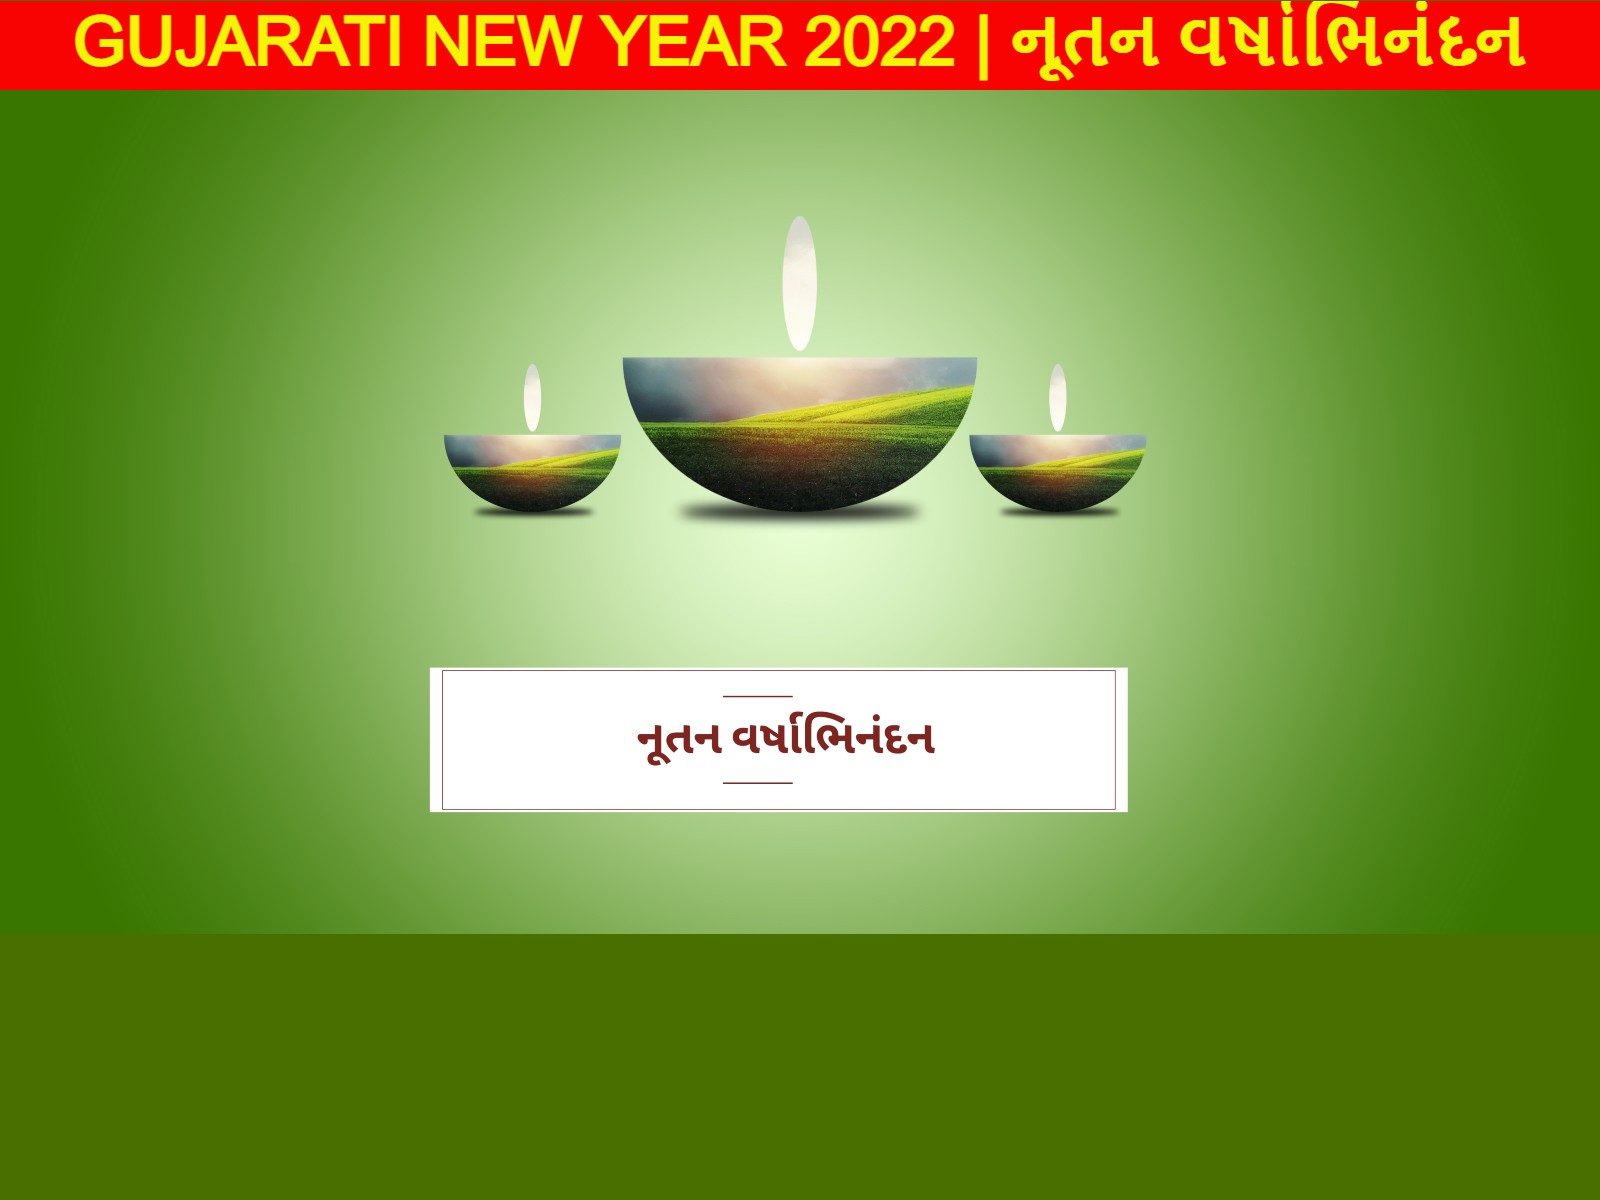 14462 Hindu Happy New Year Images Stock Photos  Vectors  Shutterstock